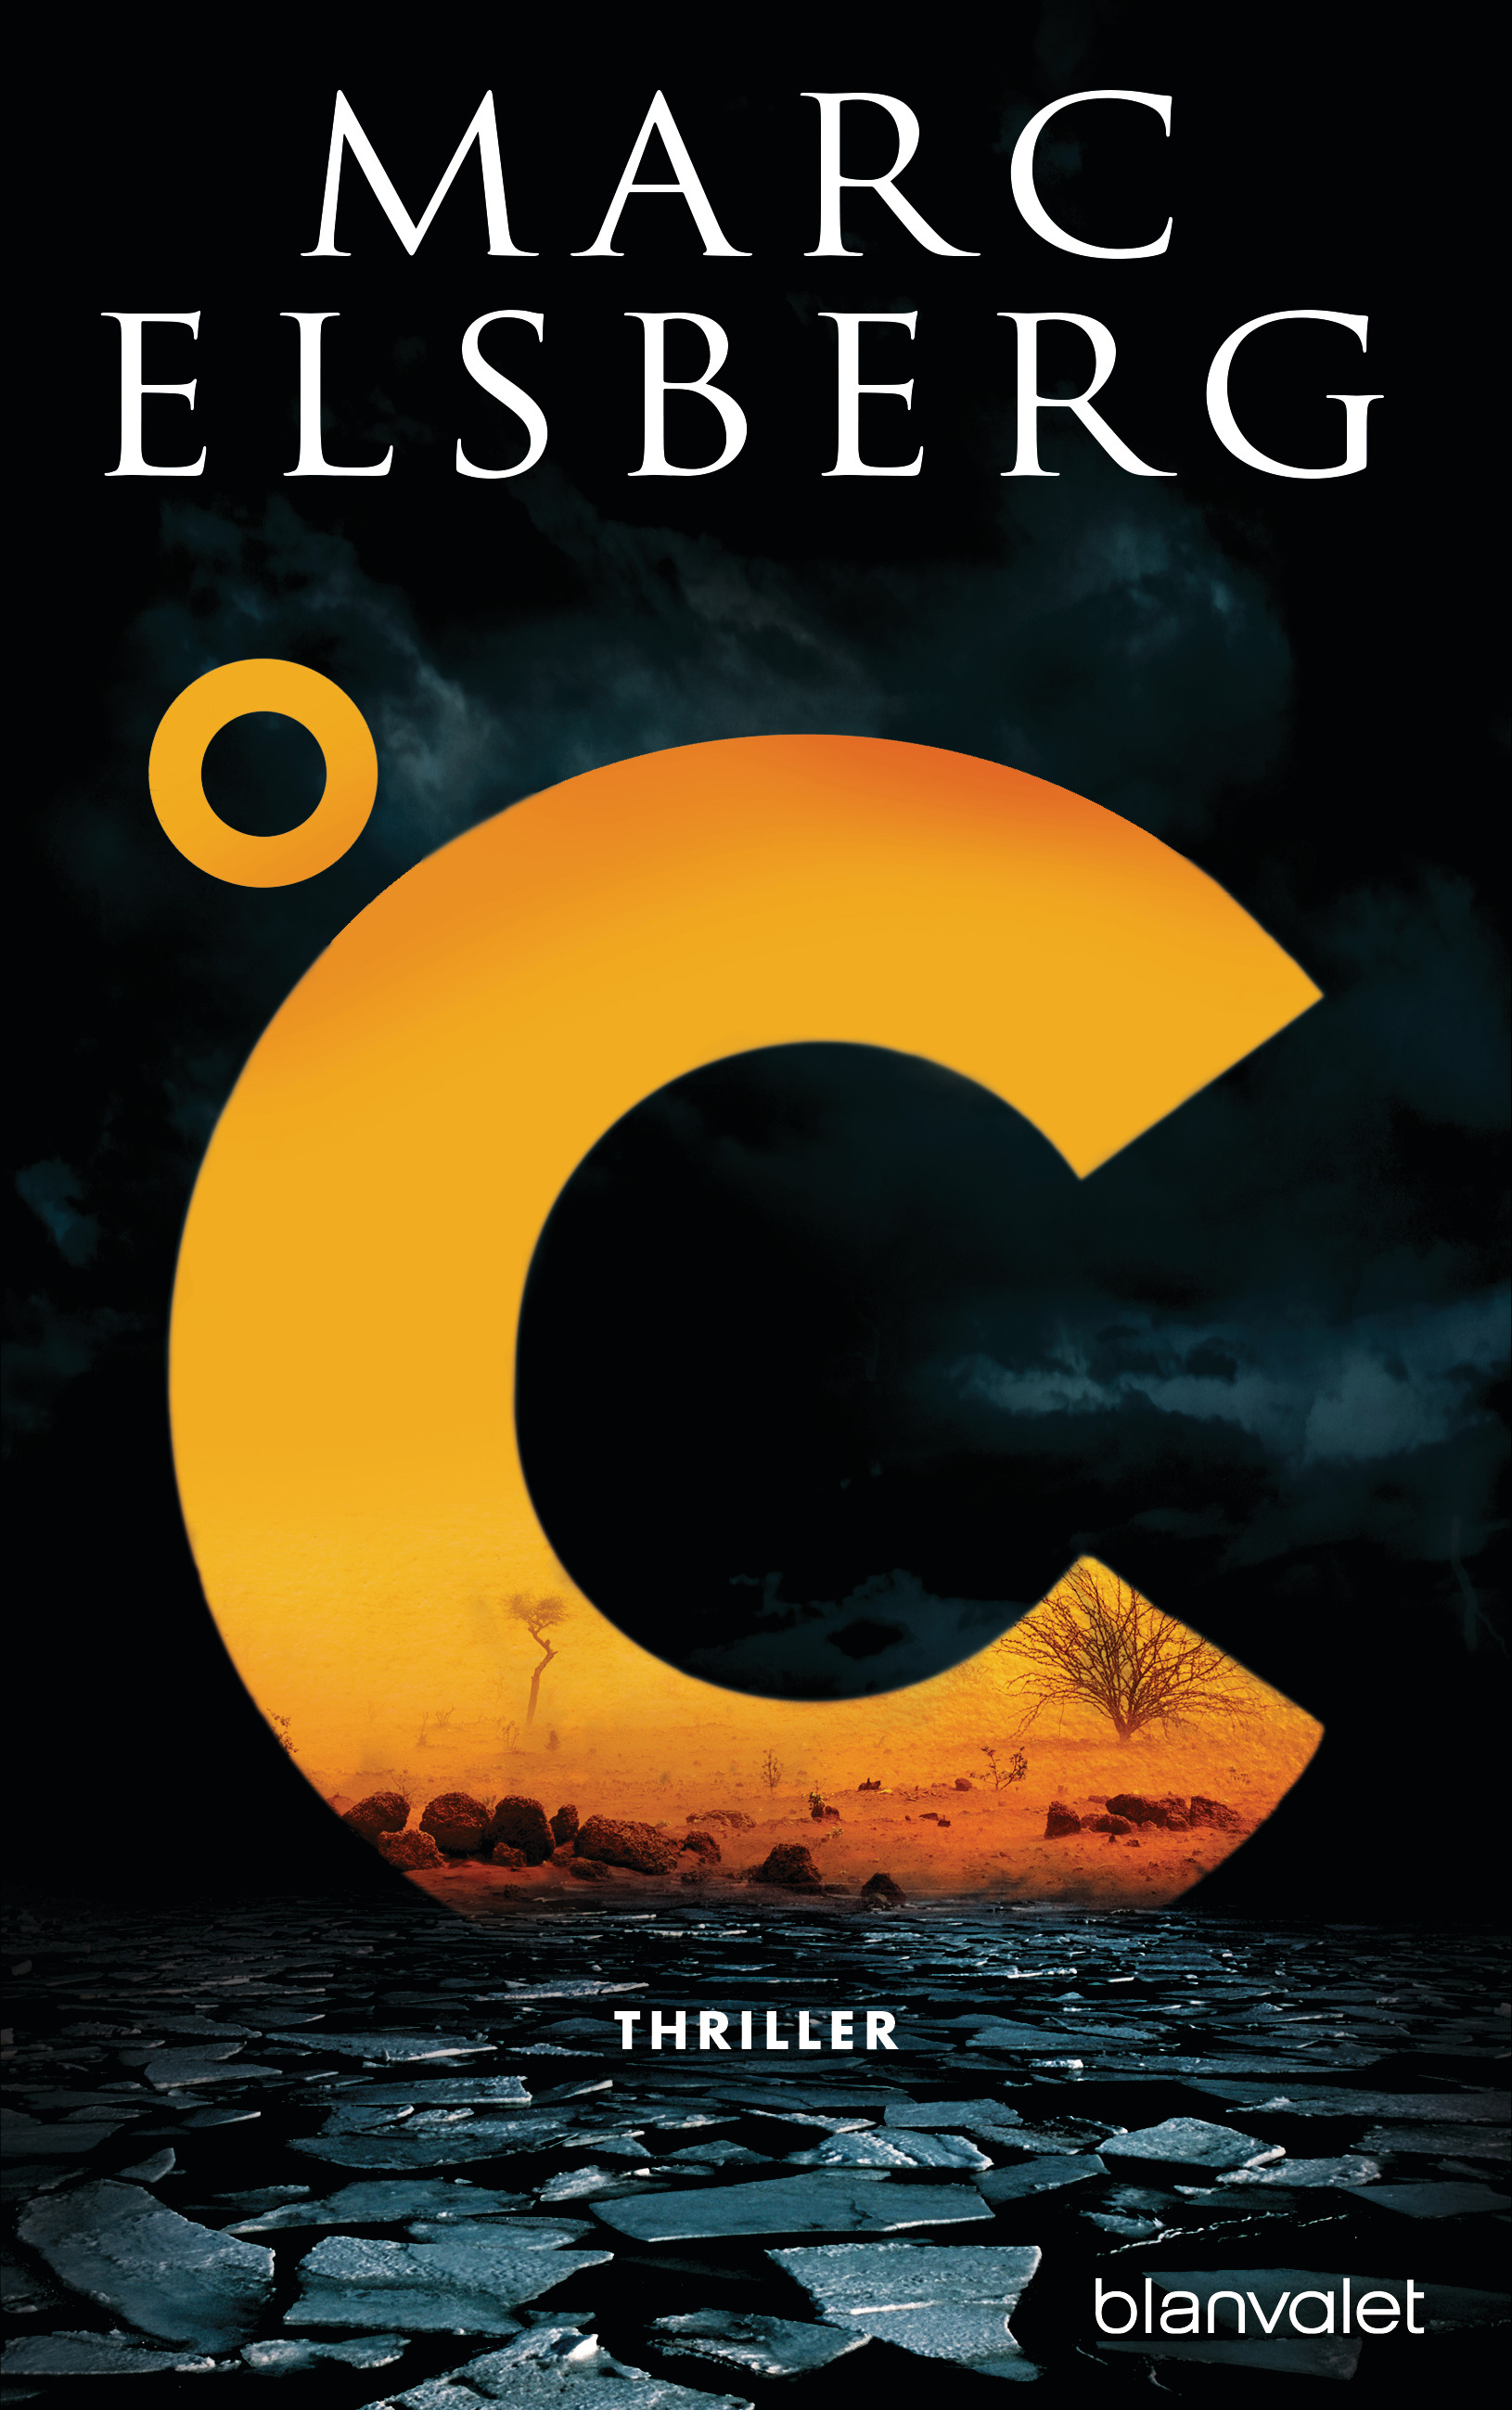 °C – Celsius (Hardcover, Deutsch language, Blanvalet Verlag)